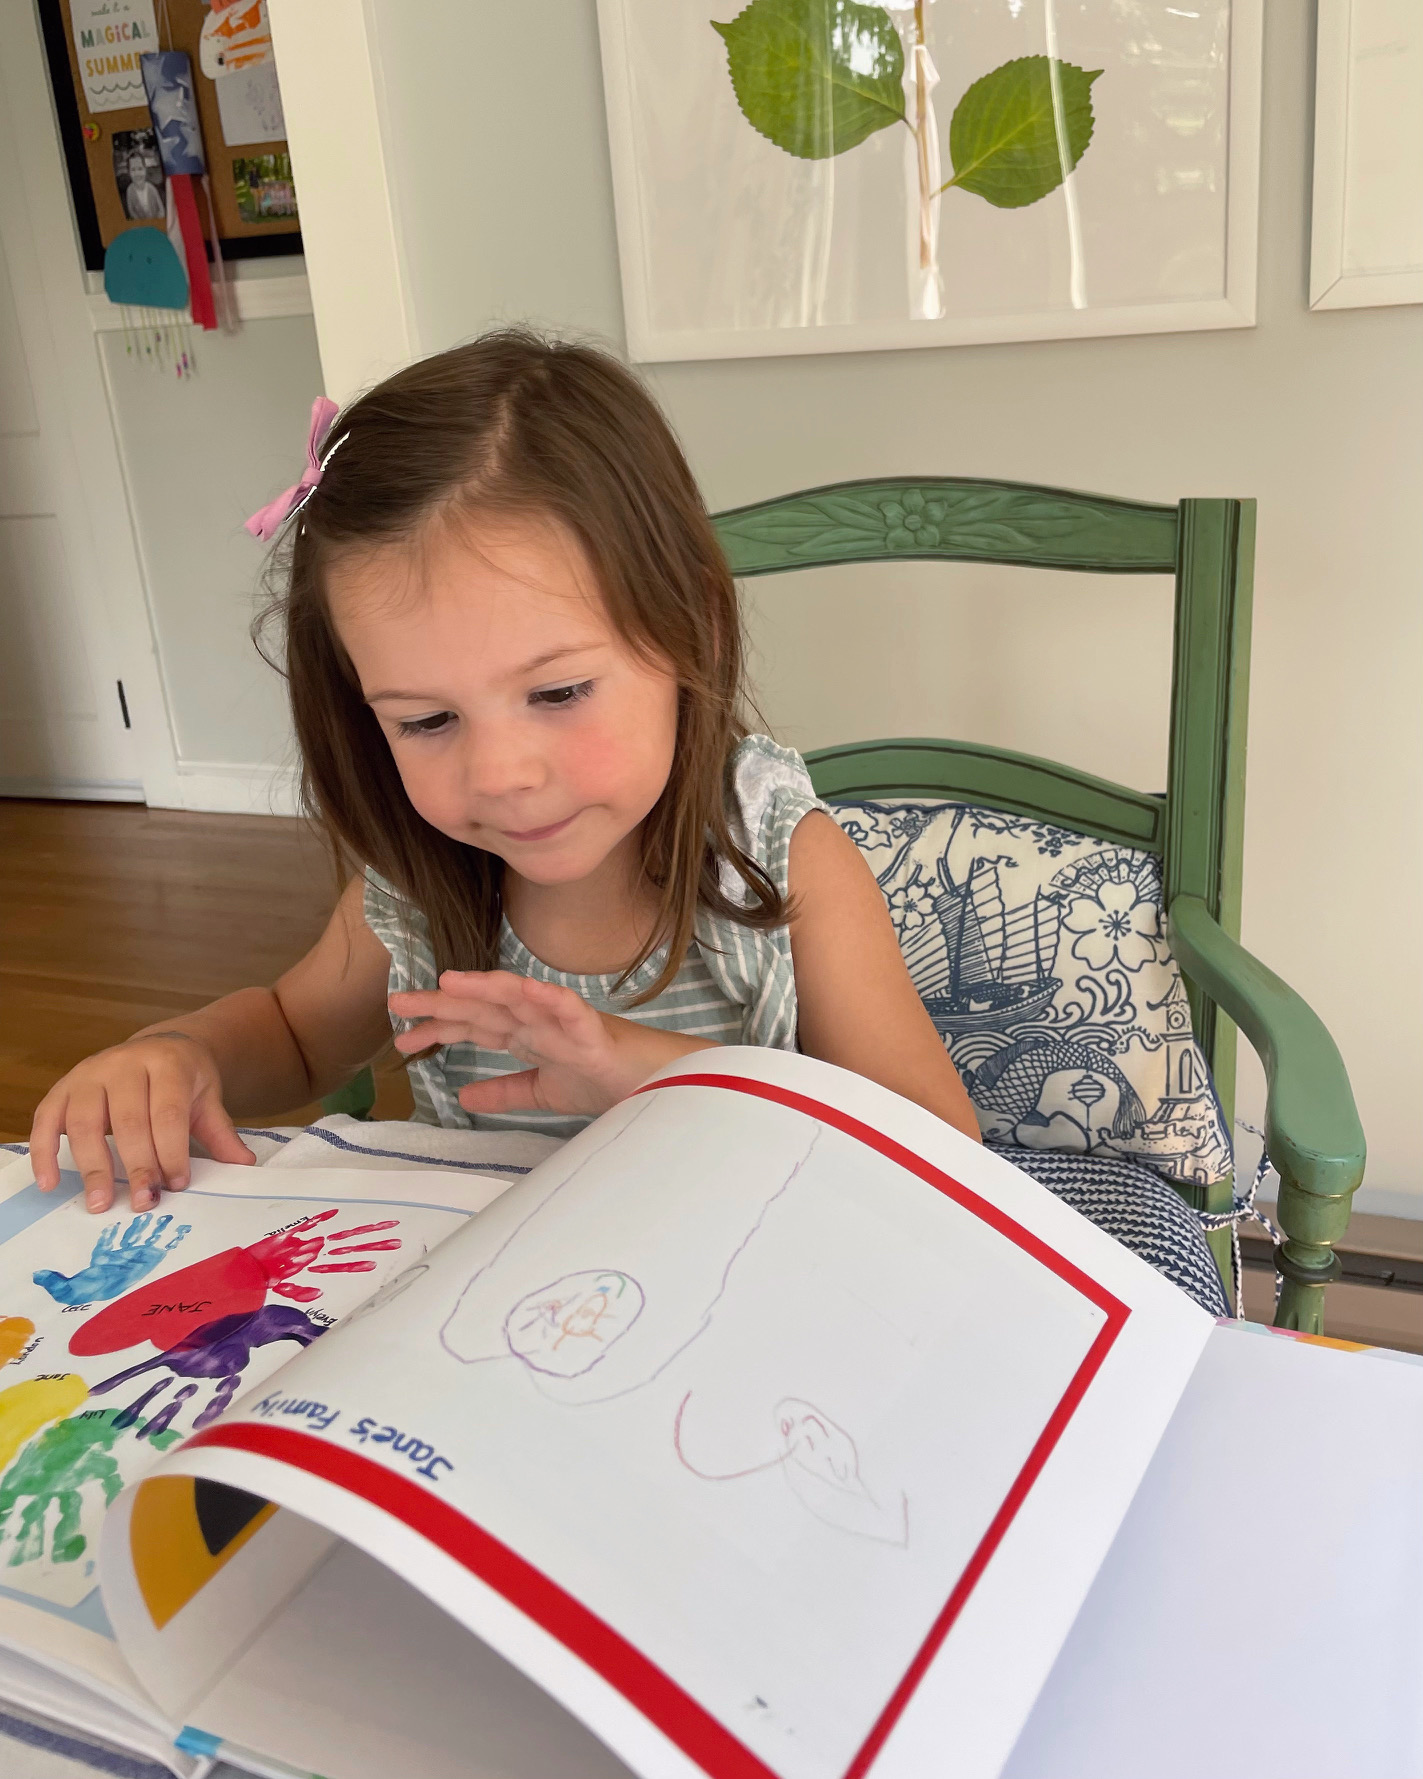 Artkive Turns Your Kid's Art Into A Keepsake Book